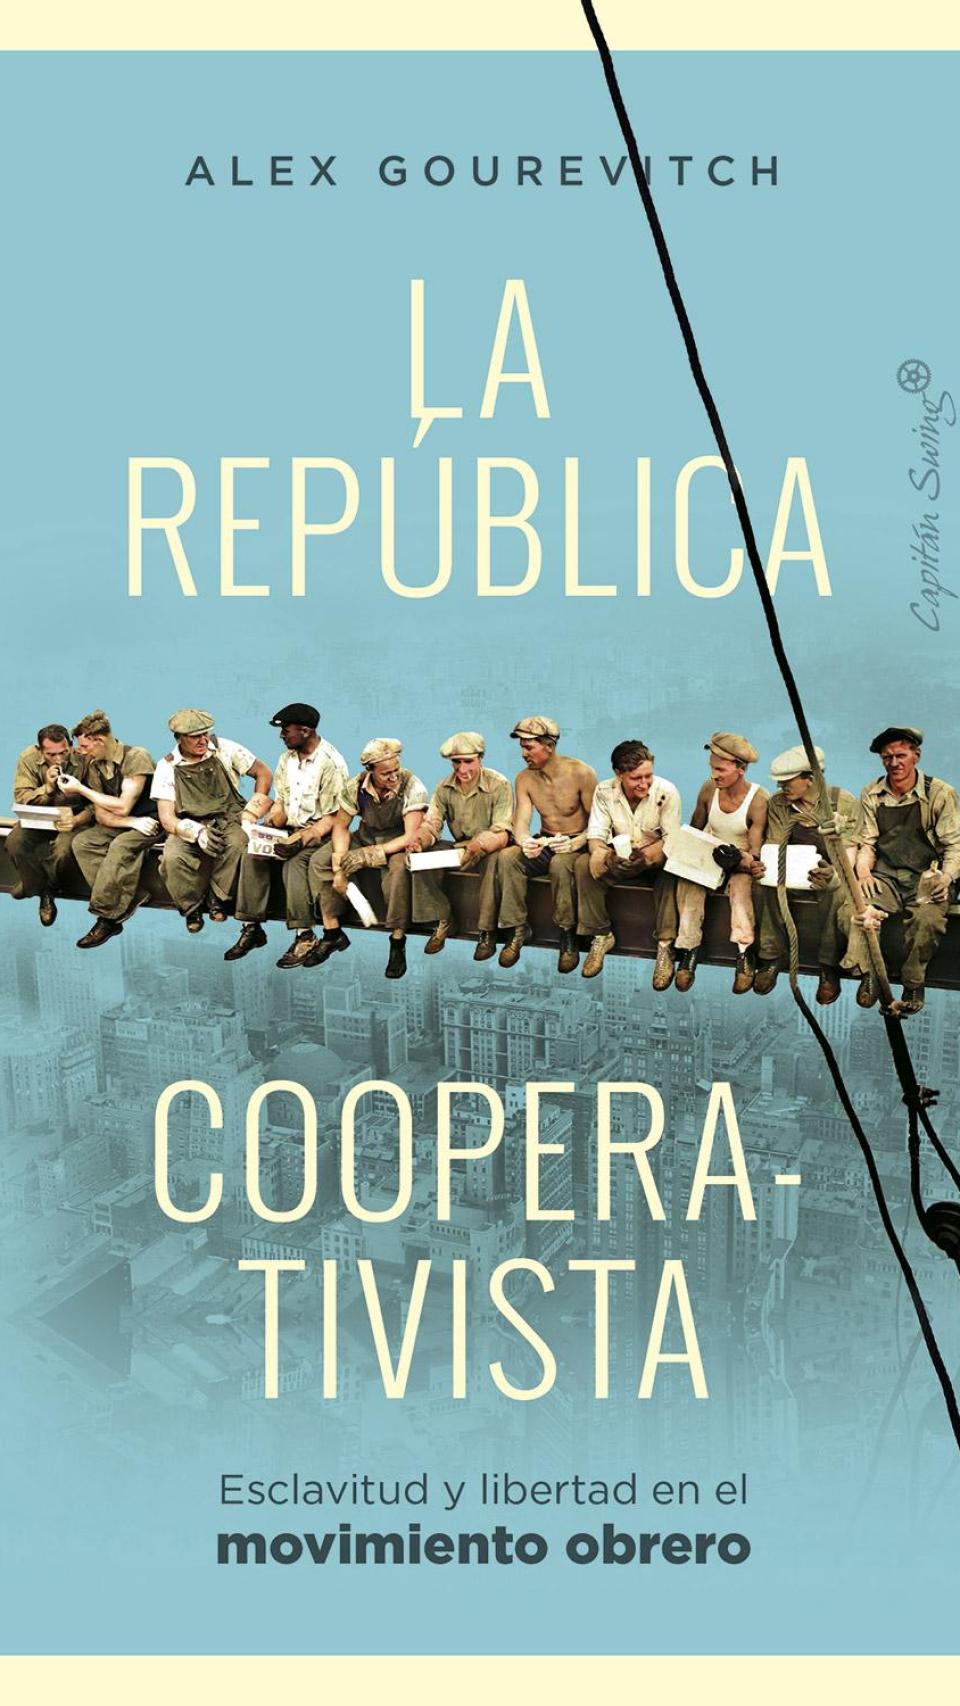 Portada del libro de Alex Gourevitch, 'La república cooperativista'